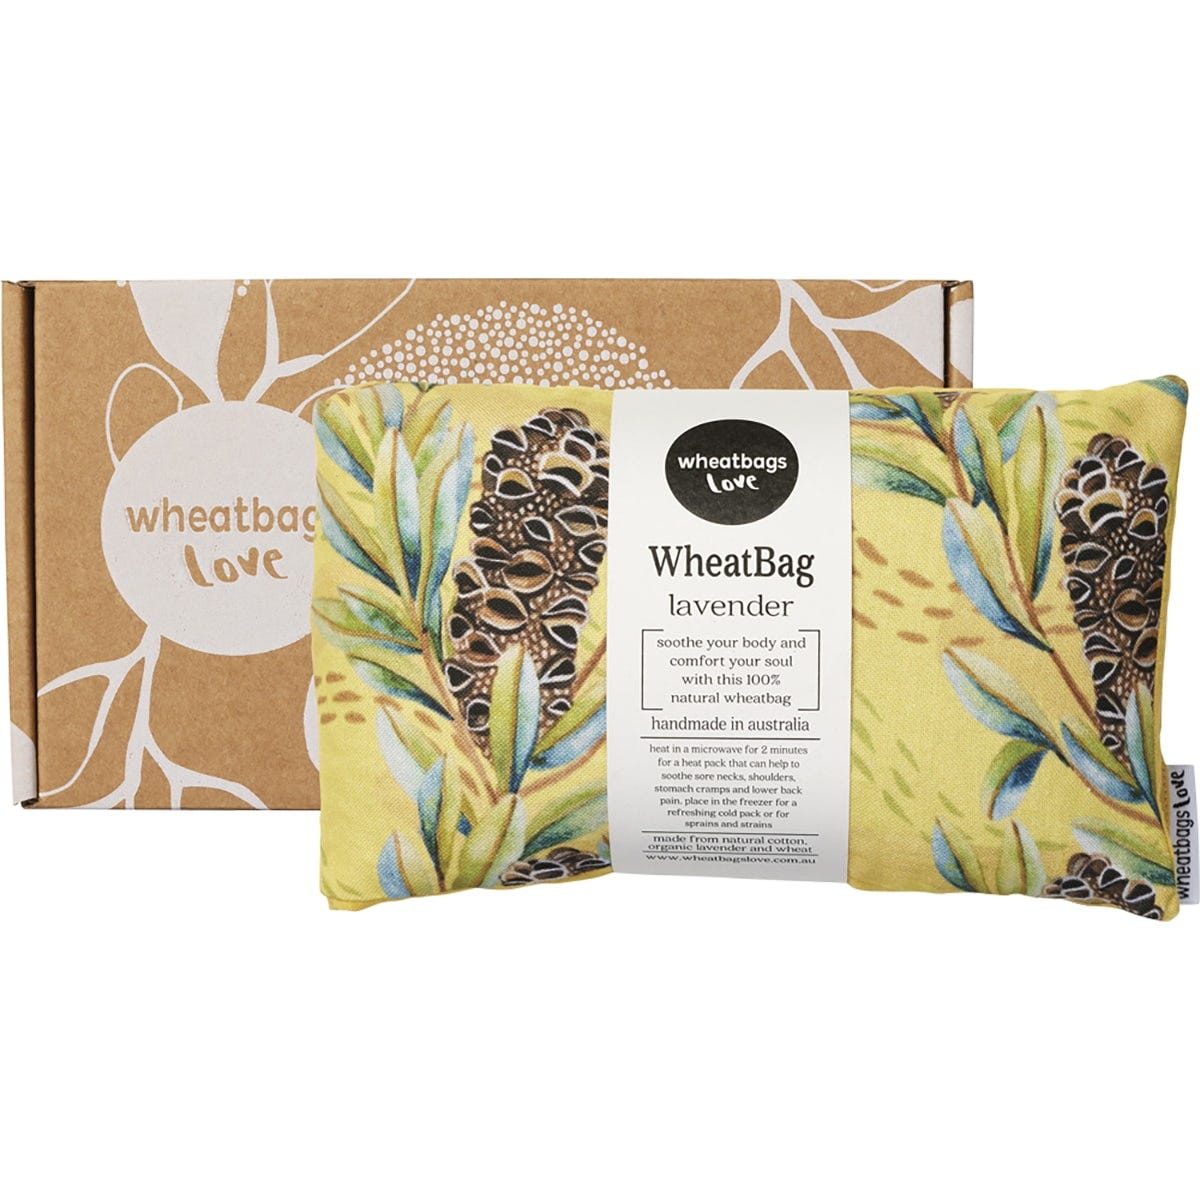 Wheatbags Love Wheatbag Banksia Pod Lavender Scented - Dr Earth - Sleep & Relax, Pain Relief